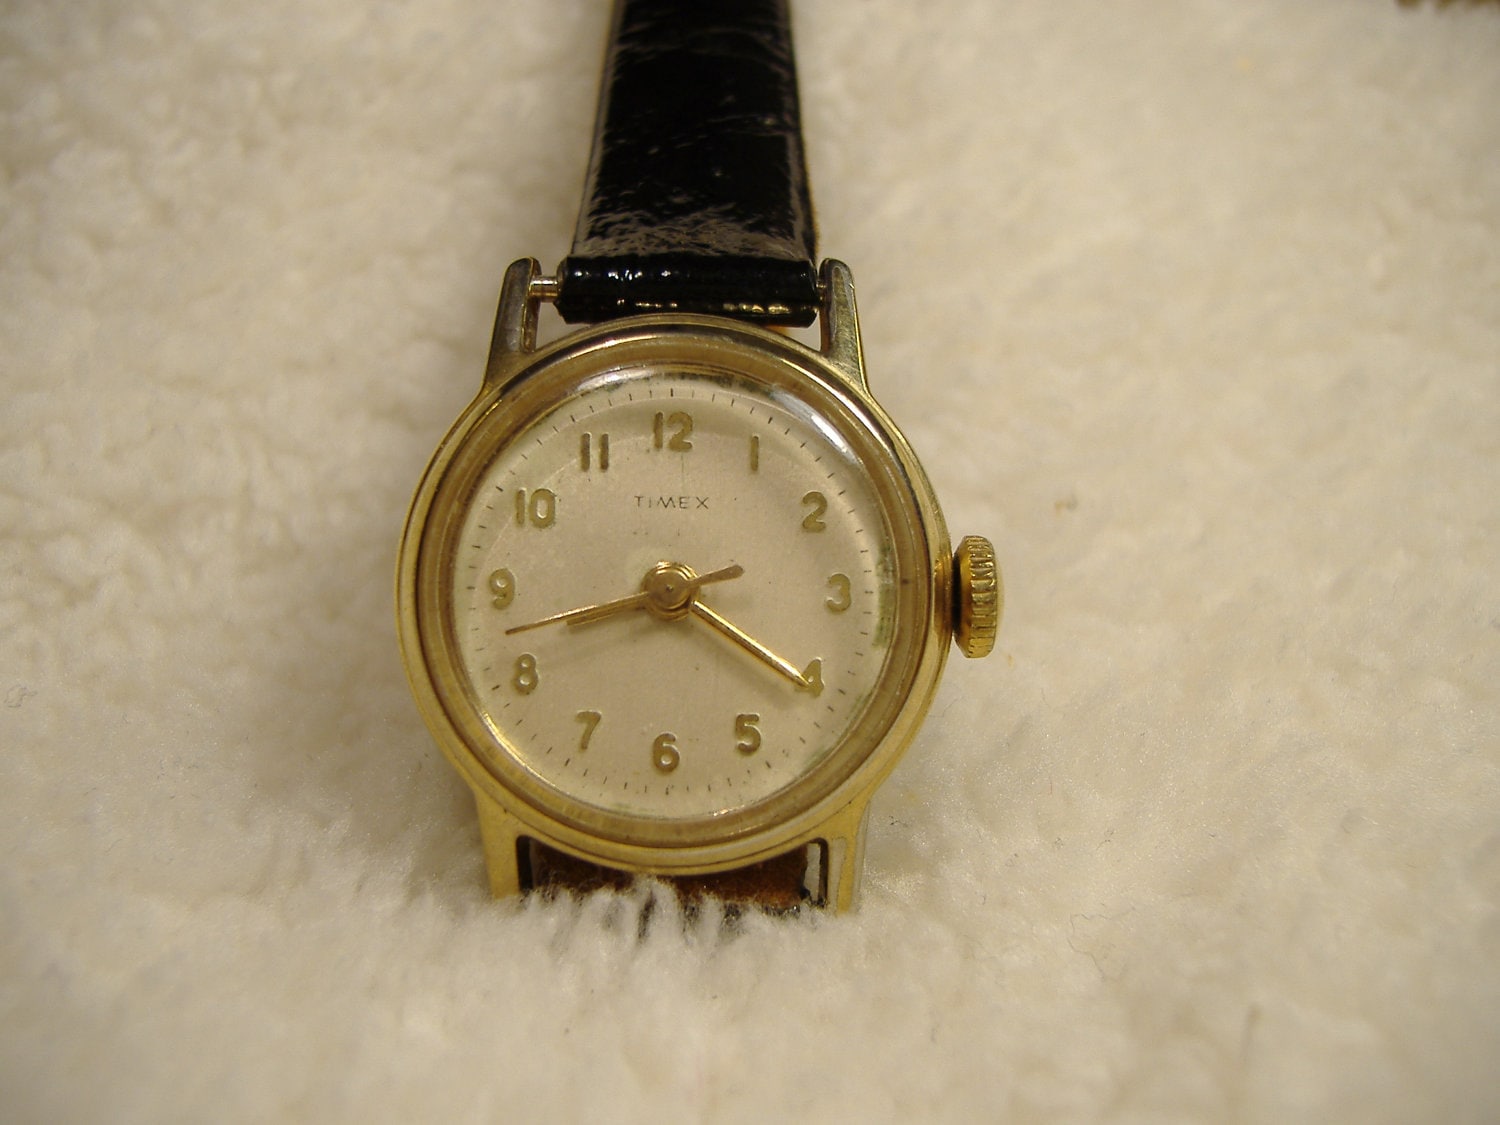 Vintage 1960s Timex Manual Wind Watch.